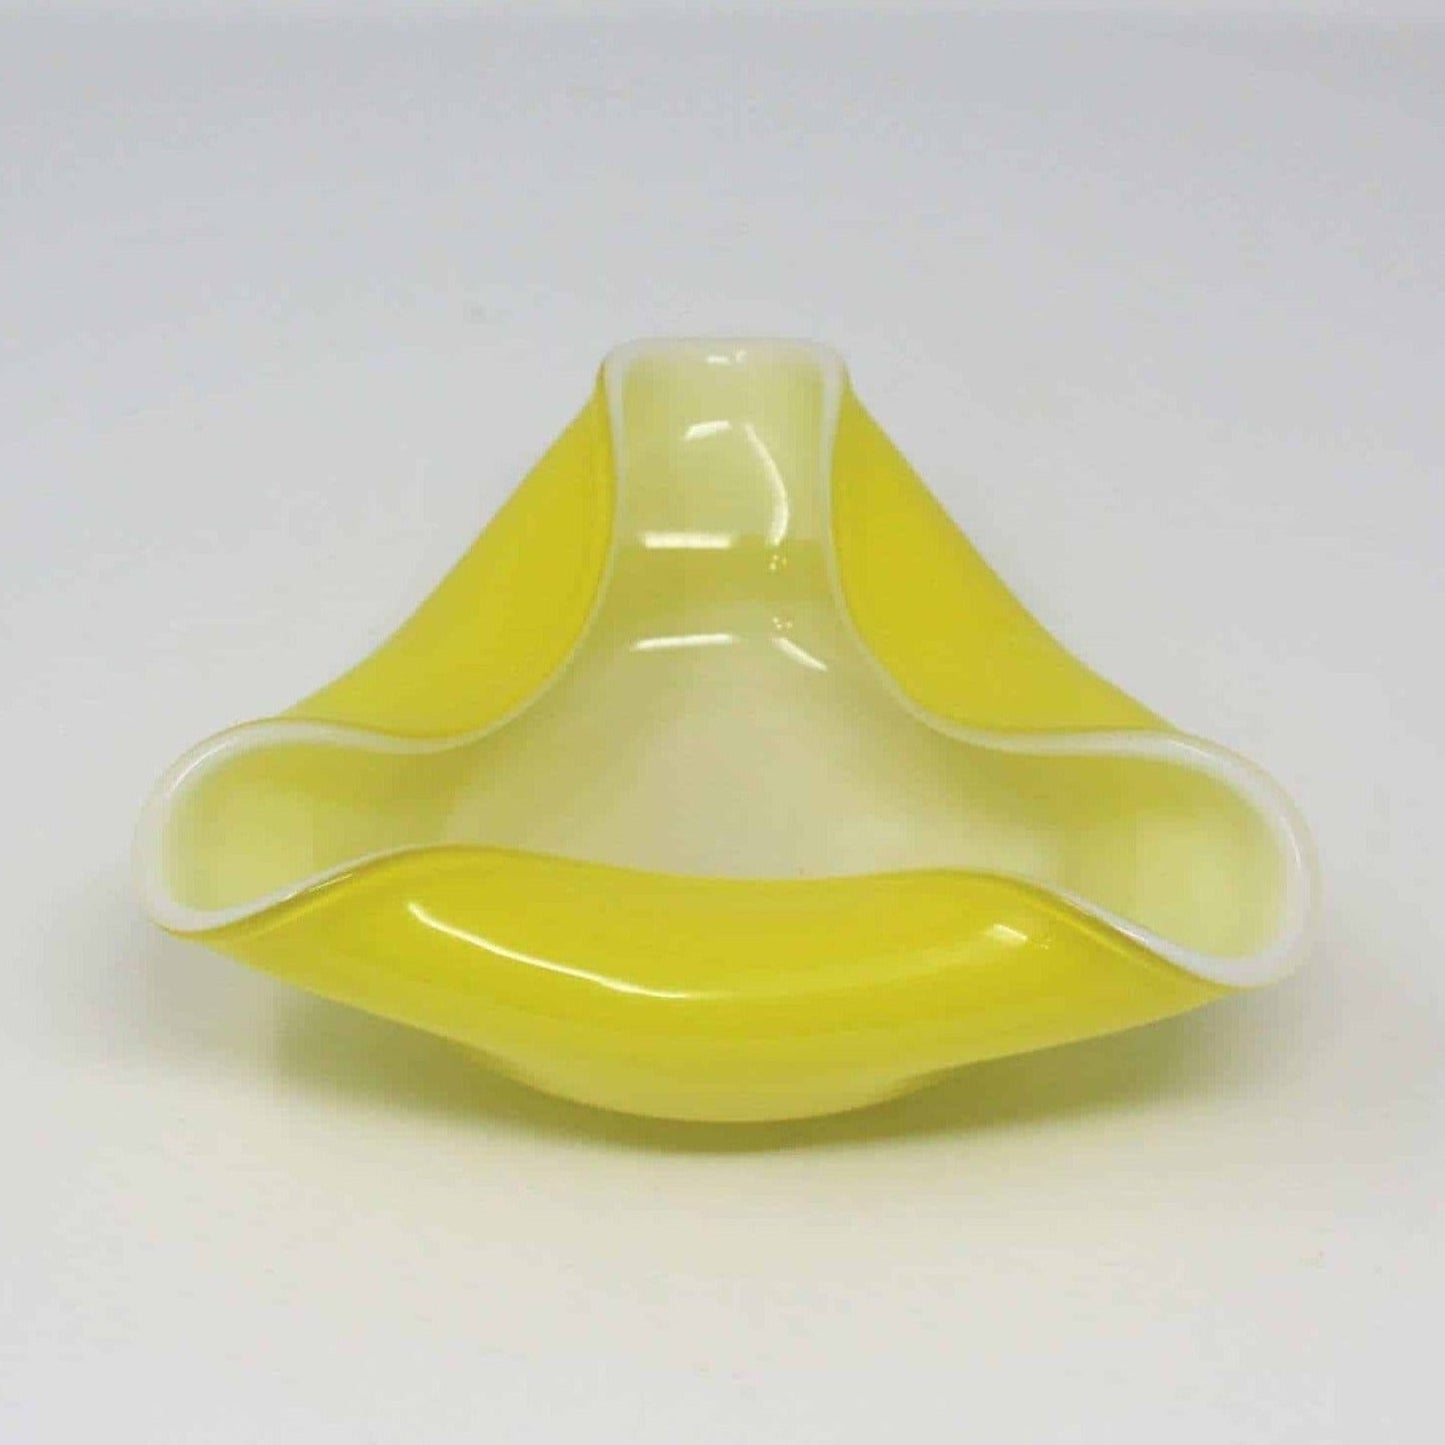 Bowl, Wales Japan, Cased Biomorphic Art Glass, Retro / Vintage